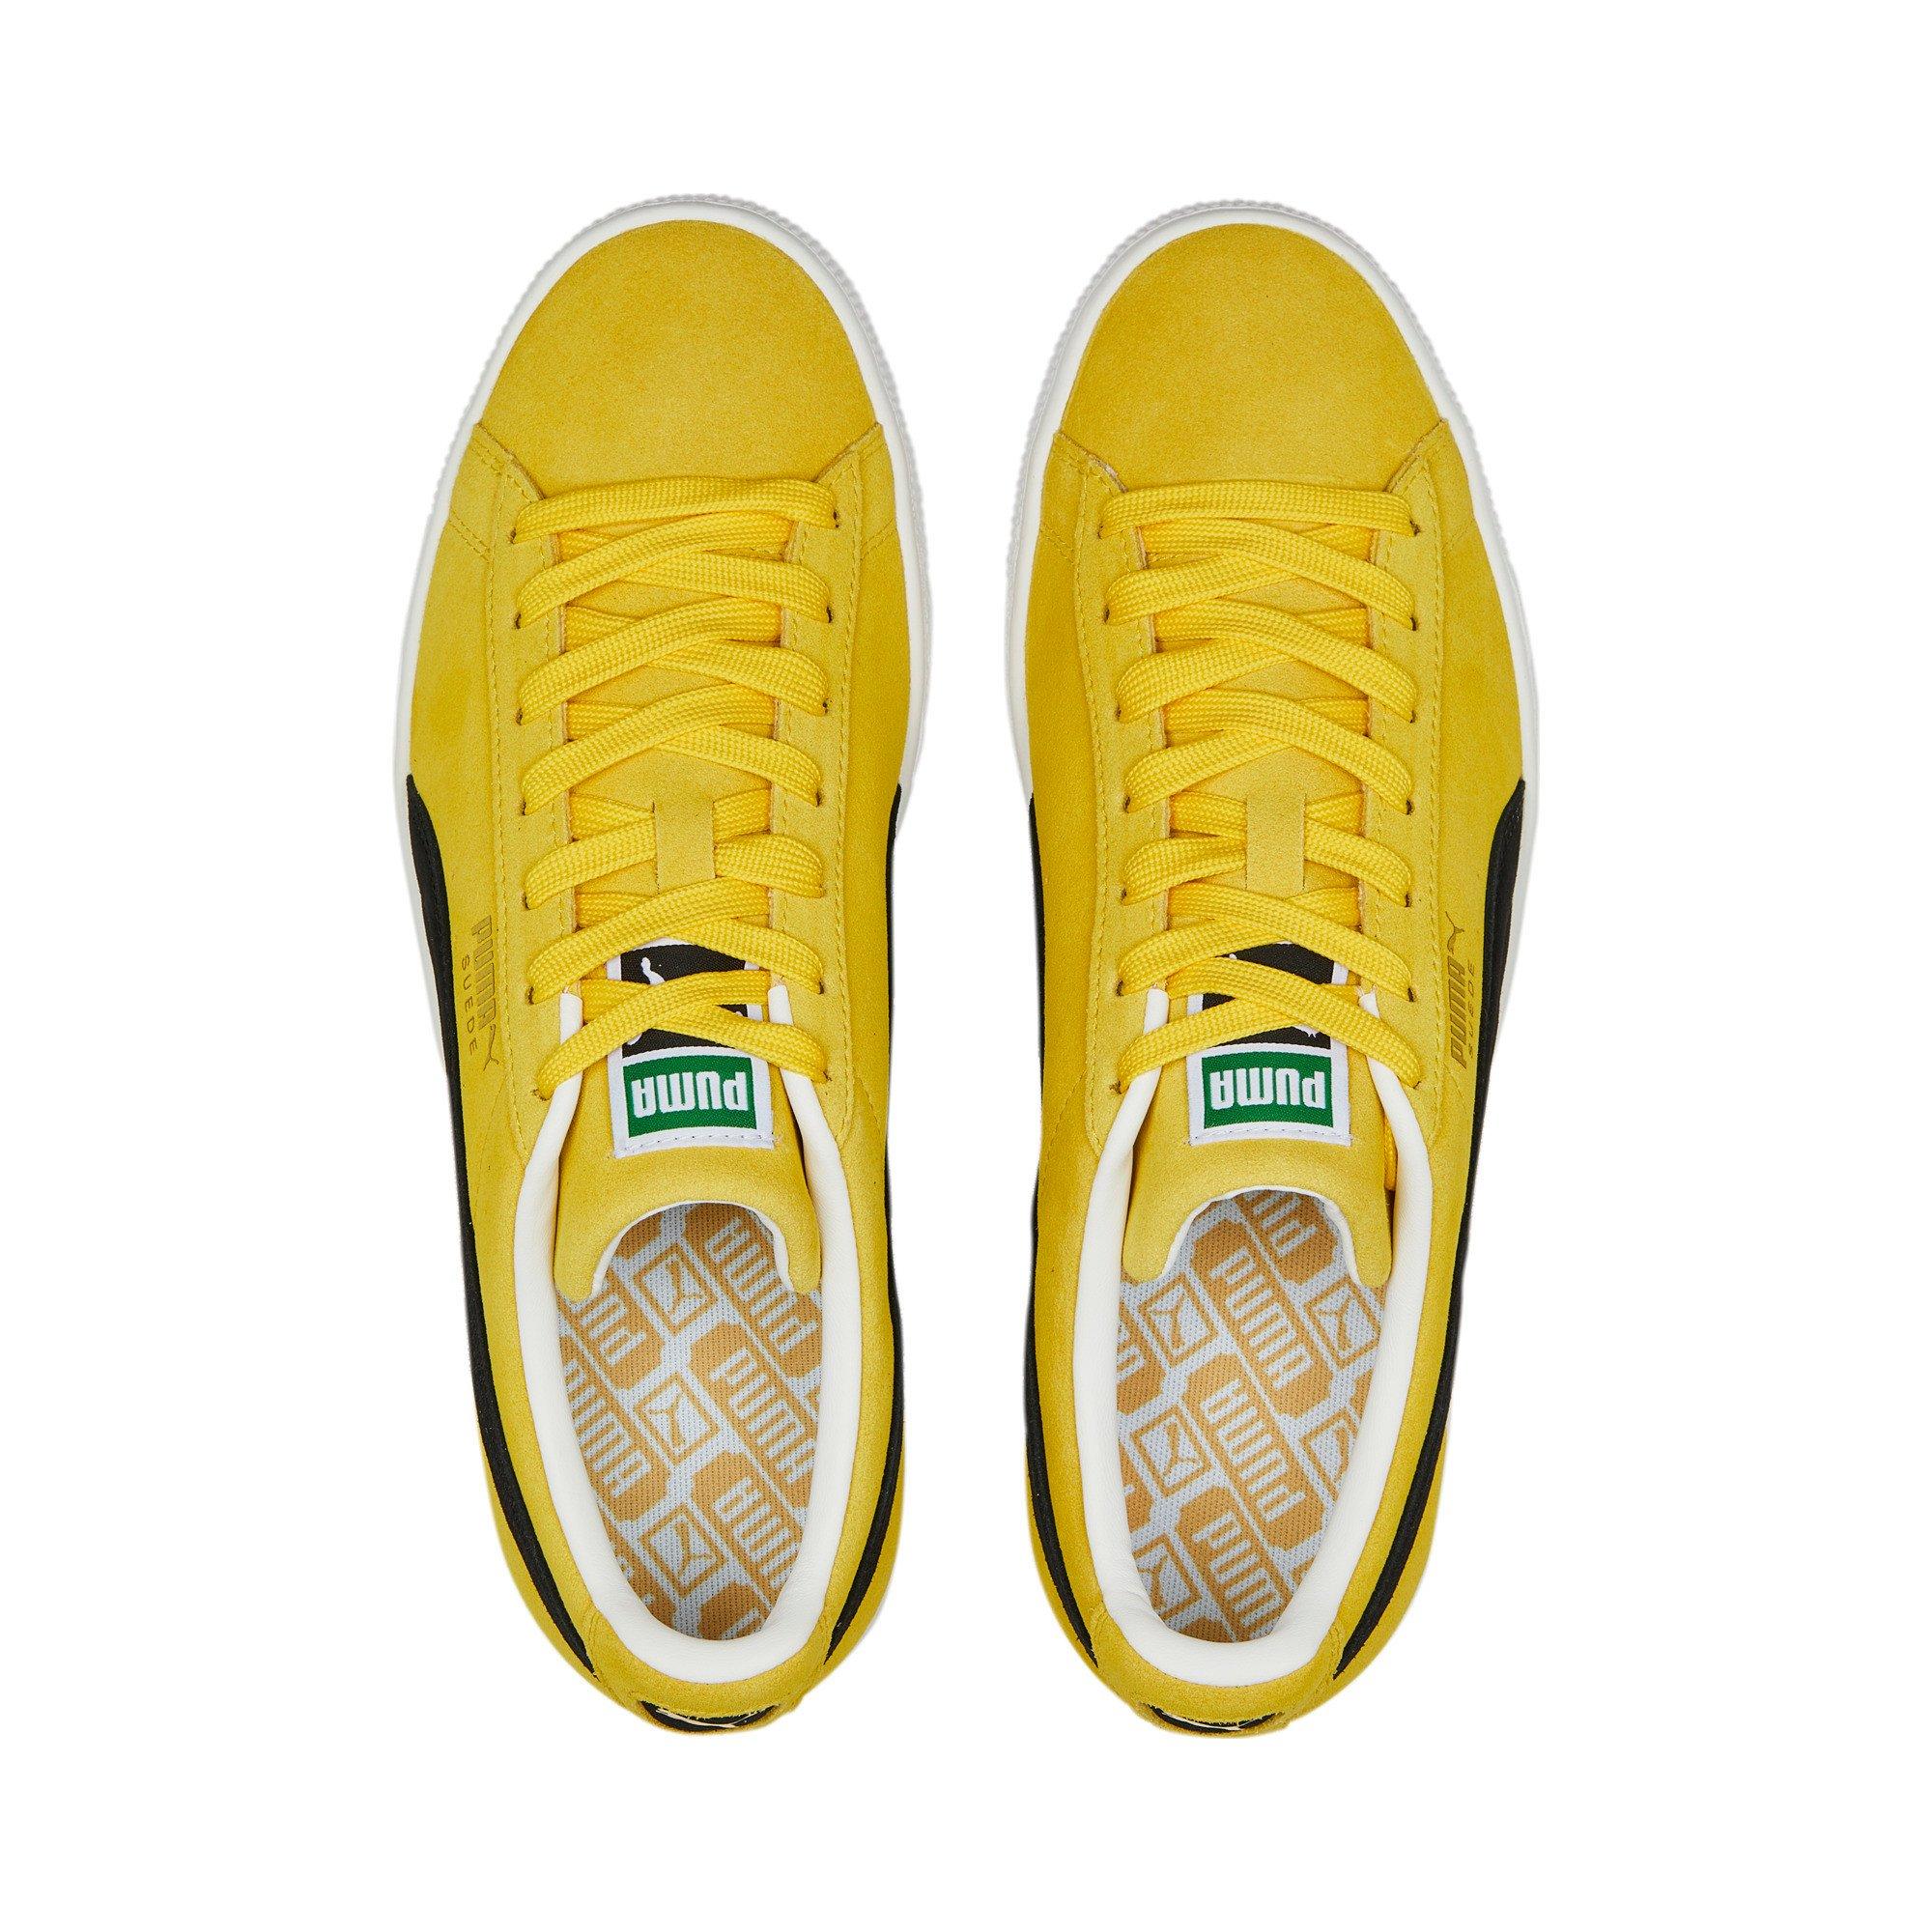 PUMA Suede "Yellow/Black/White" Men's Shoe - | City Gear